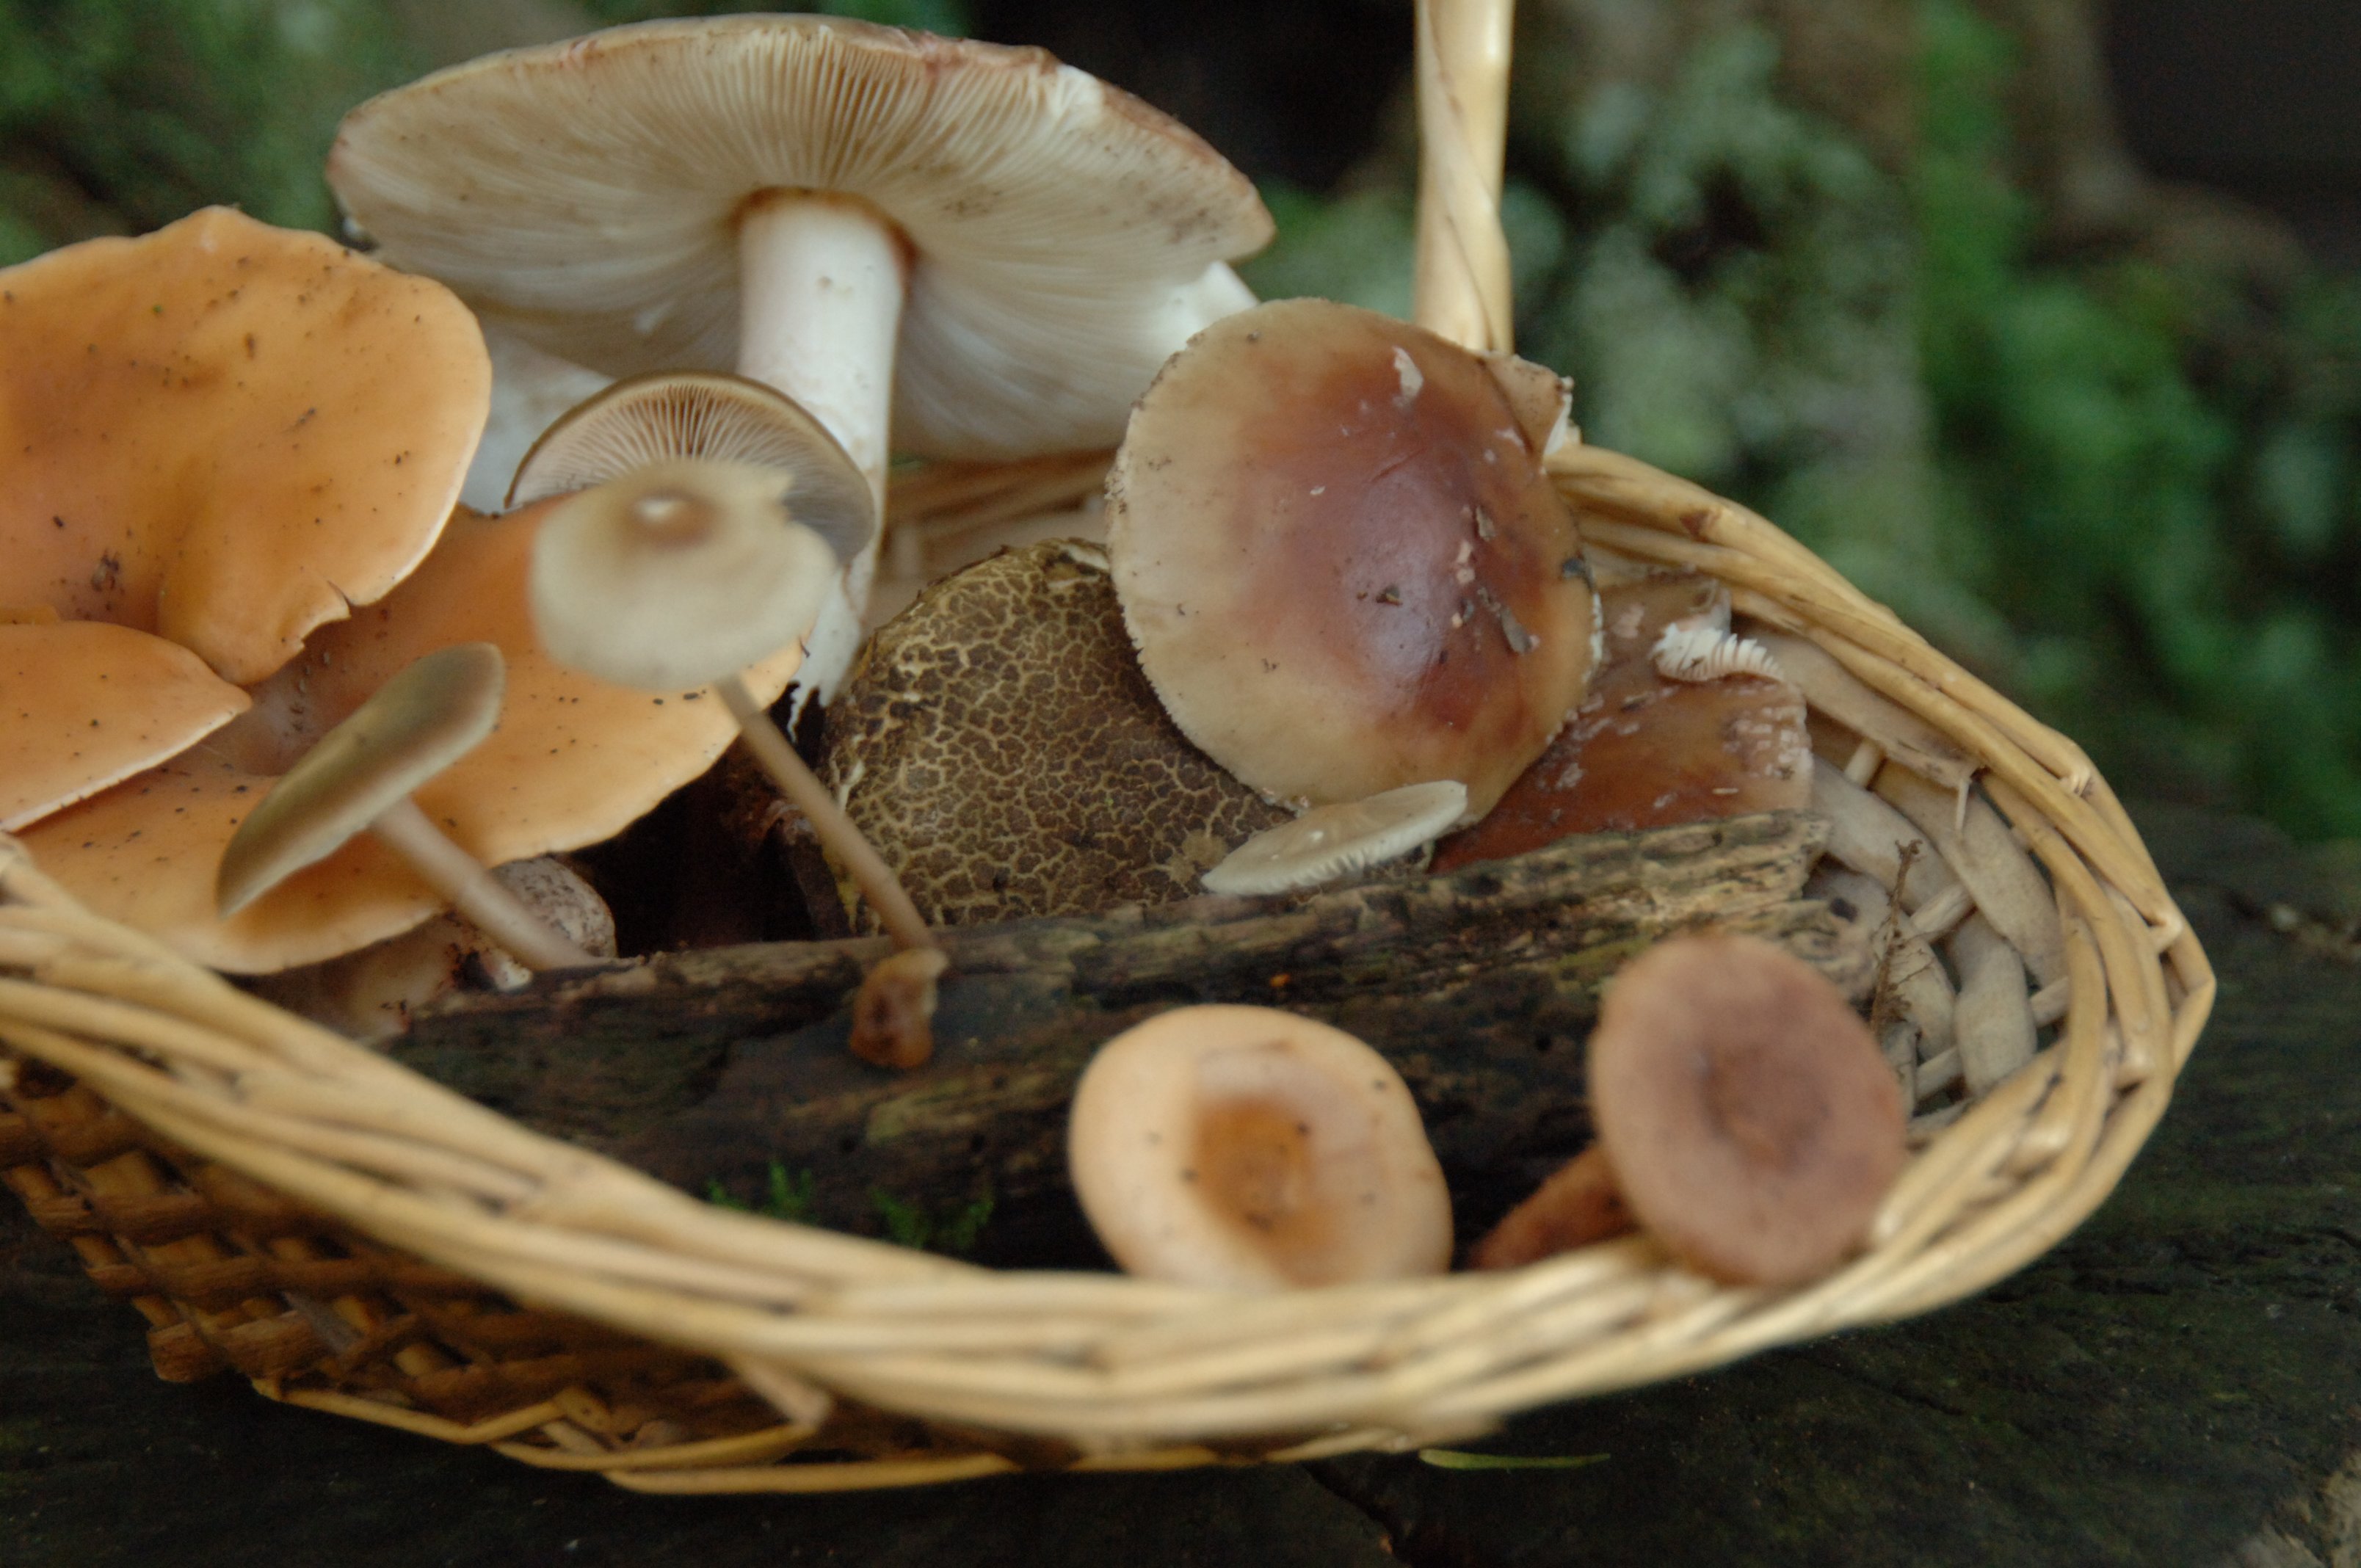 a basket of wild mushrooms